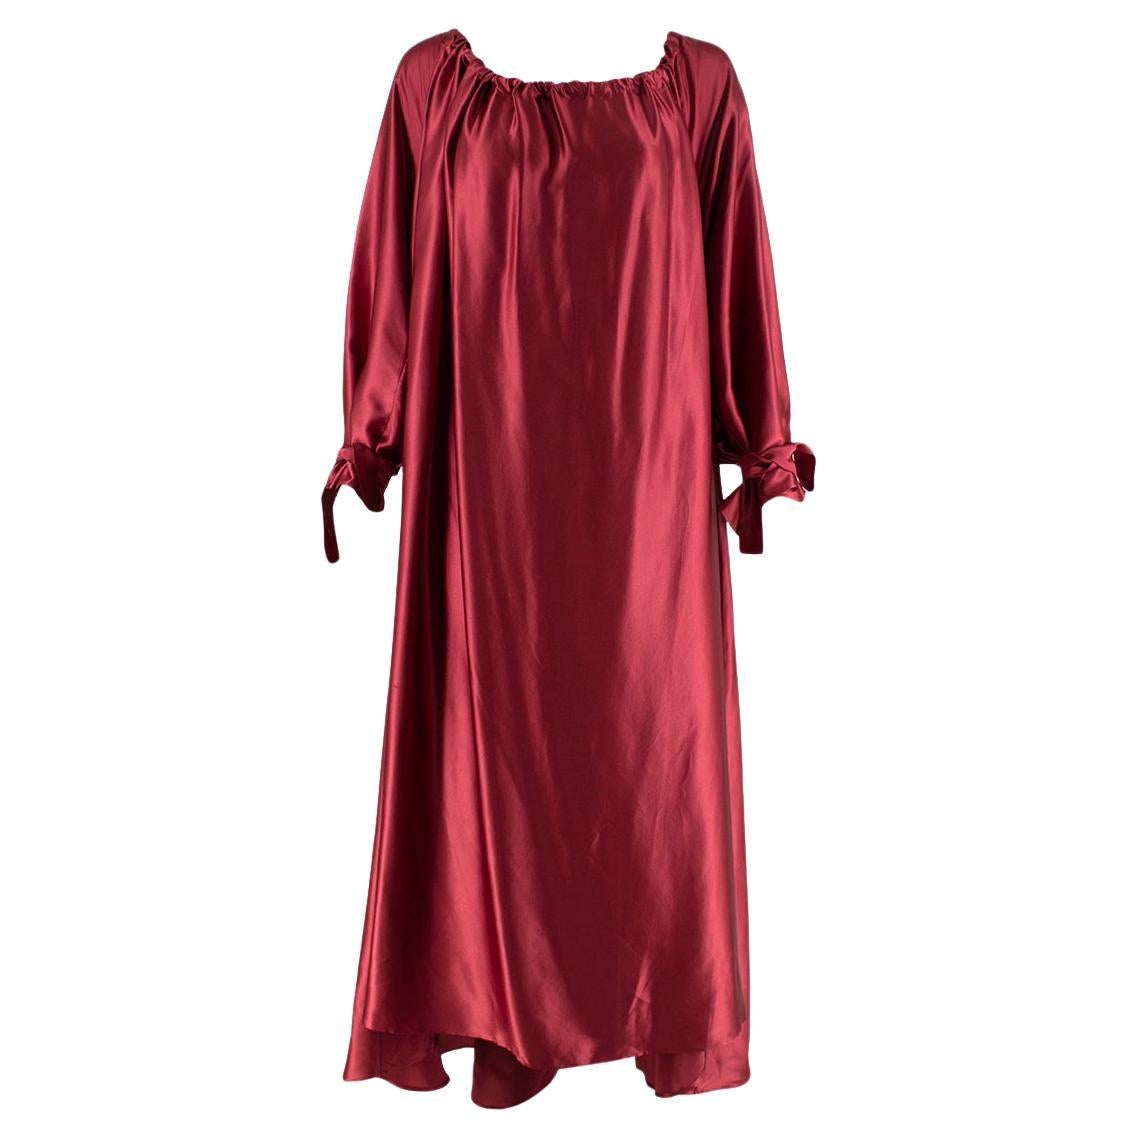 Henriette Von Gruenberg Bettina Silk Satin Low Back Draped Gown - One Size For Sale